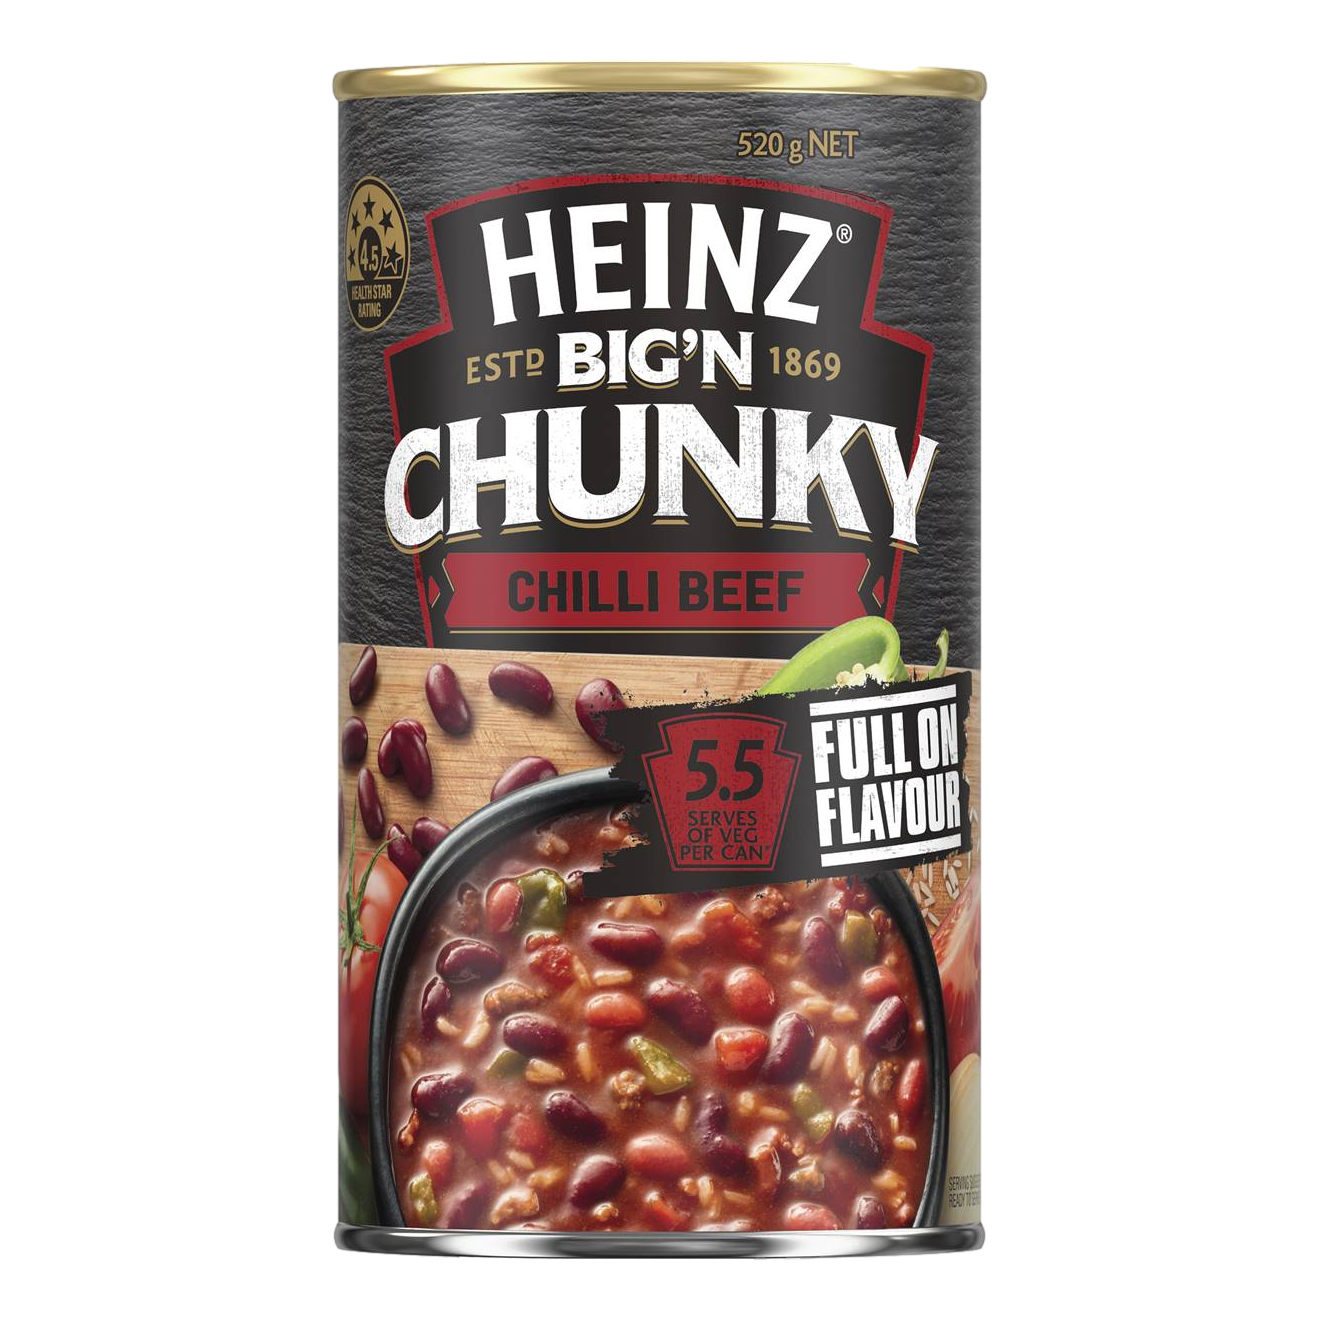 Heinz Big'N Chunky Chilli Beef 520g